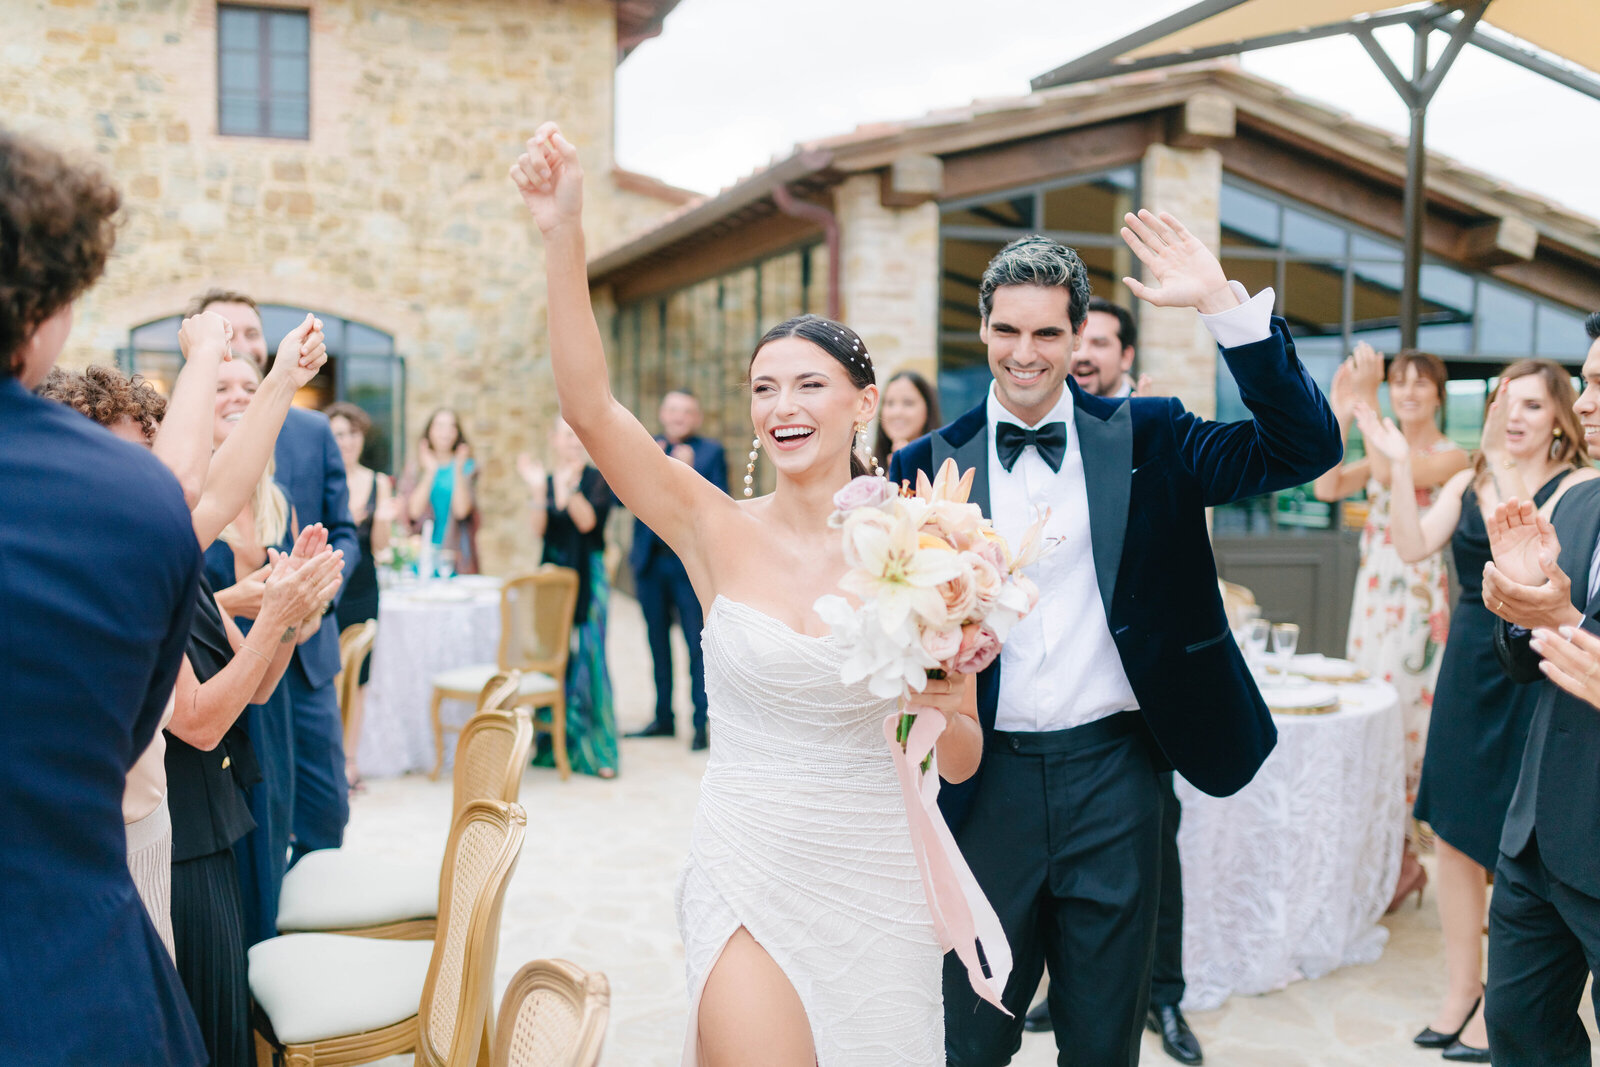 MorganeBallPhotography-Wedding-Tuscany-TheClubHouse-LovelyInstants-04-WeddingDinner-atmosphere-02-lq-39-5169